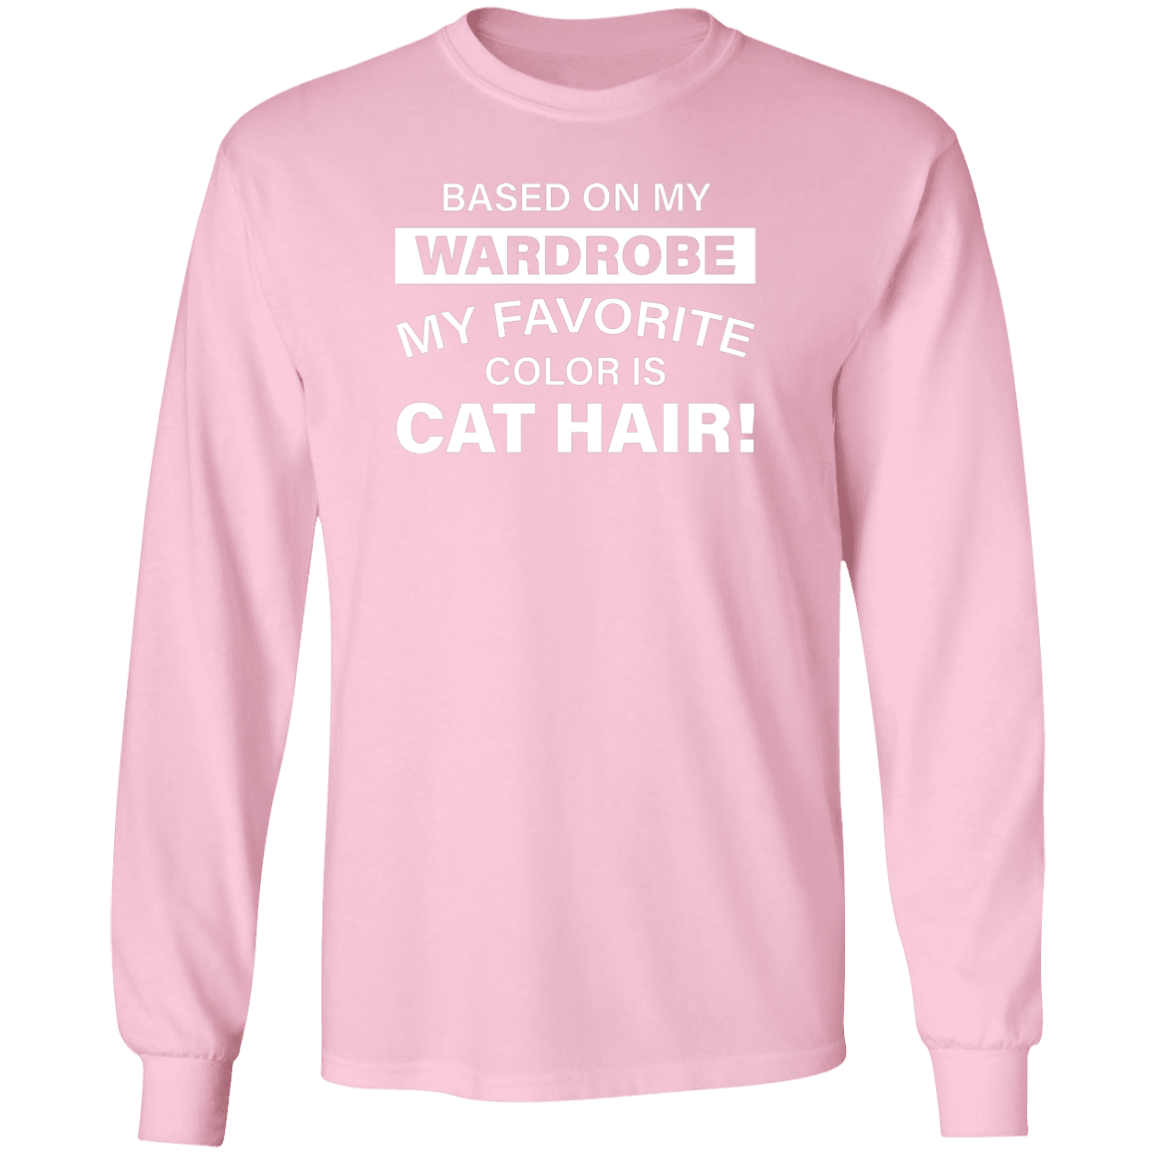 Favorite Color Cat Hair - Long Sleeve T Shirt.